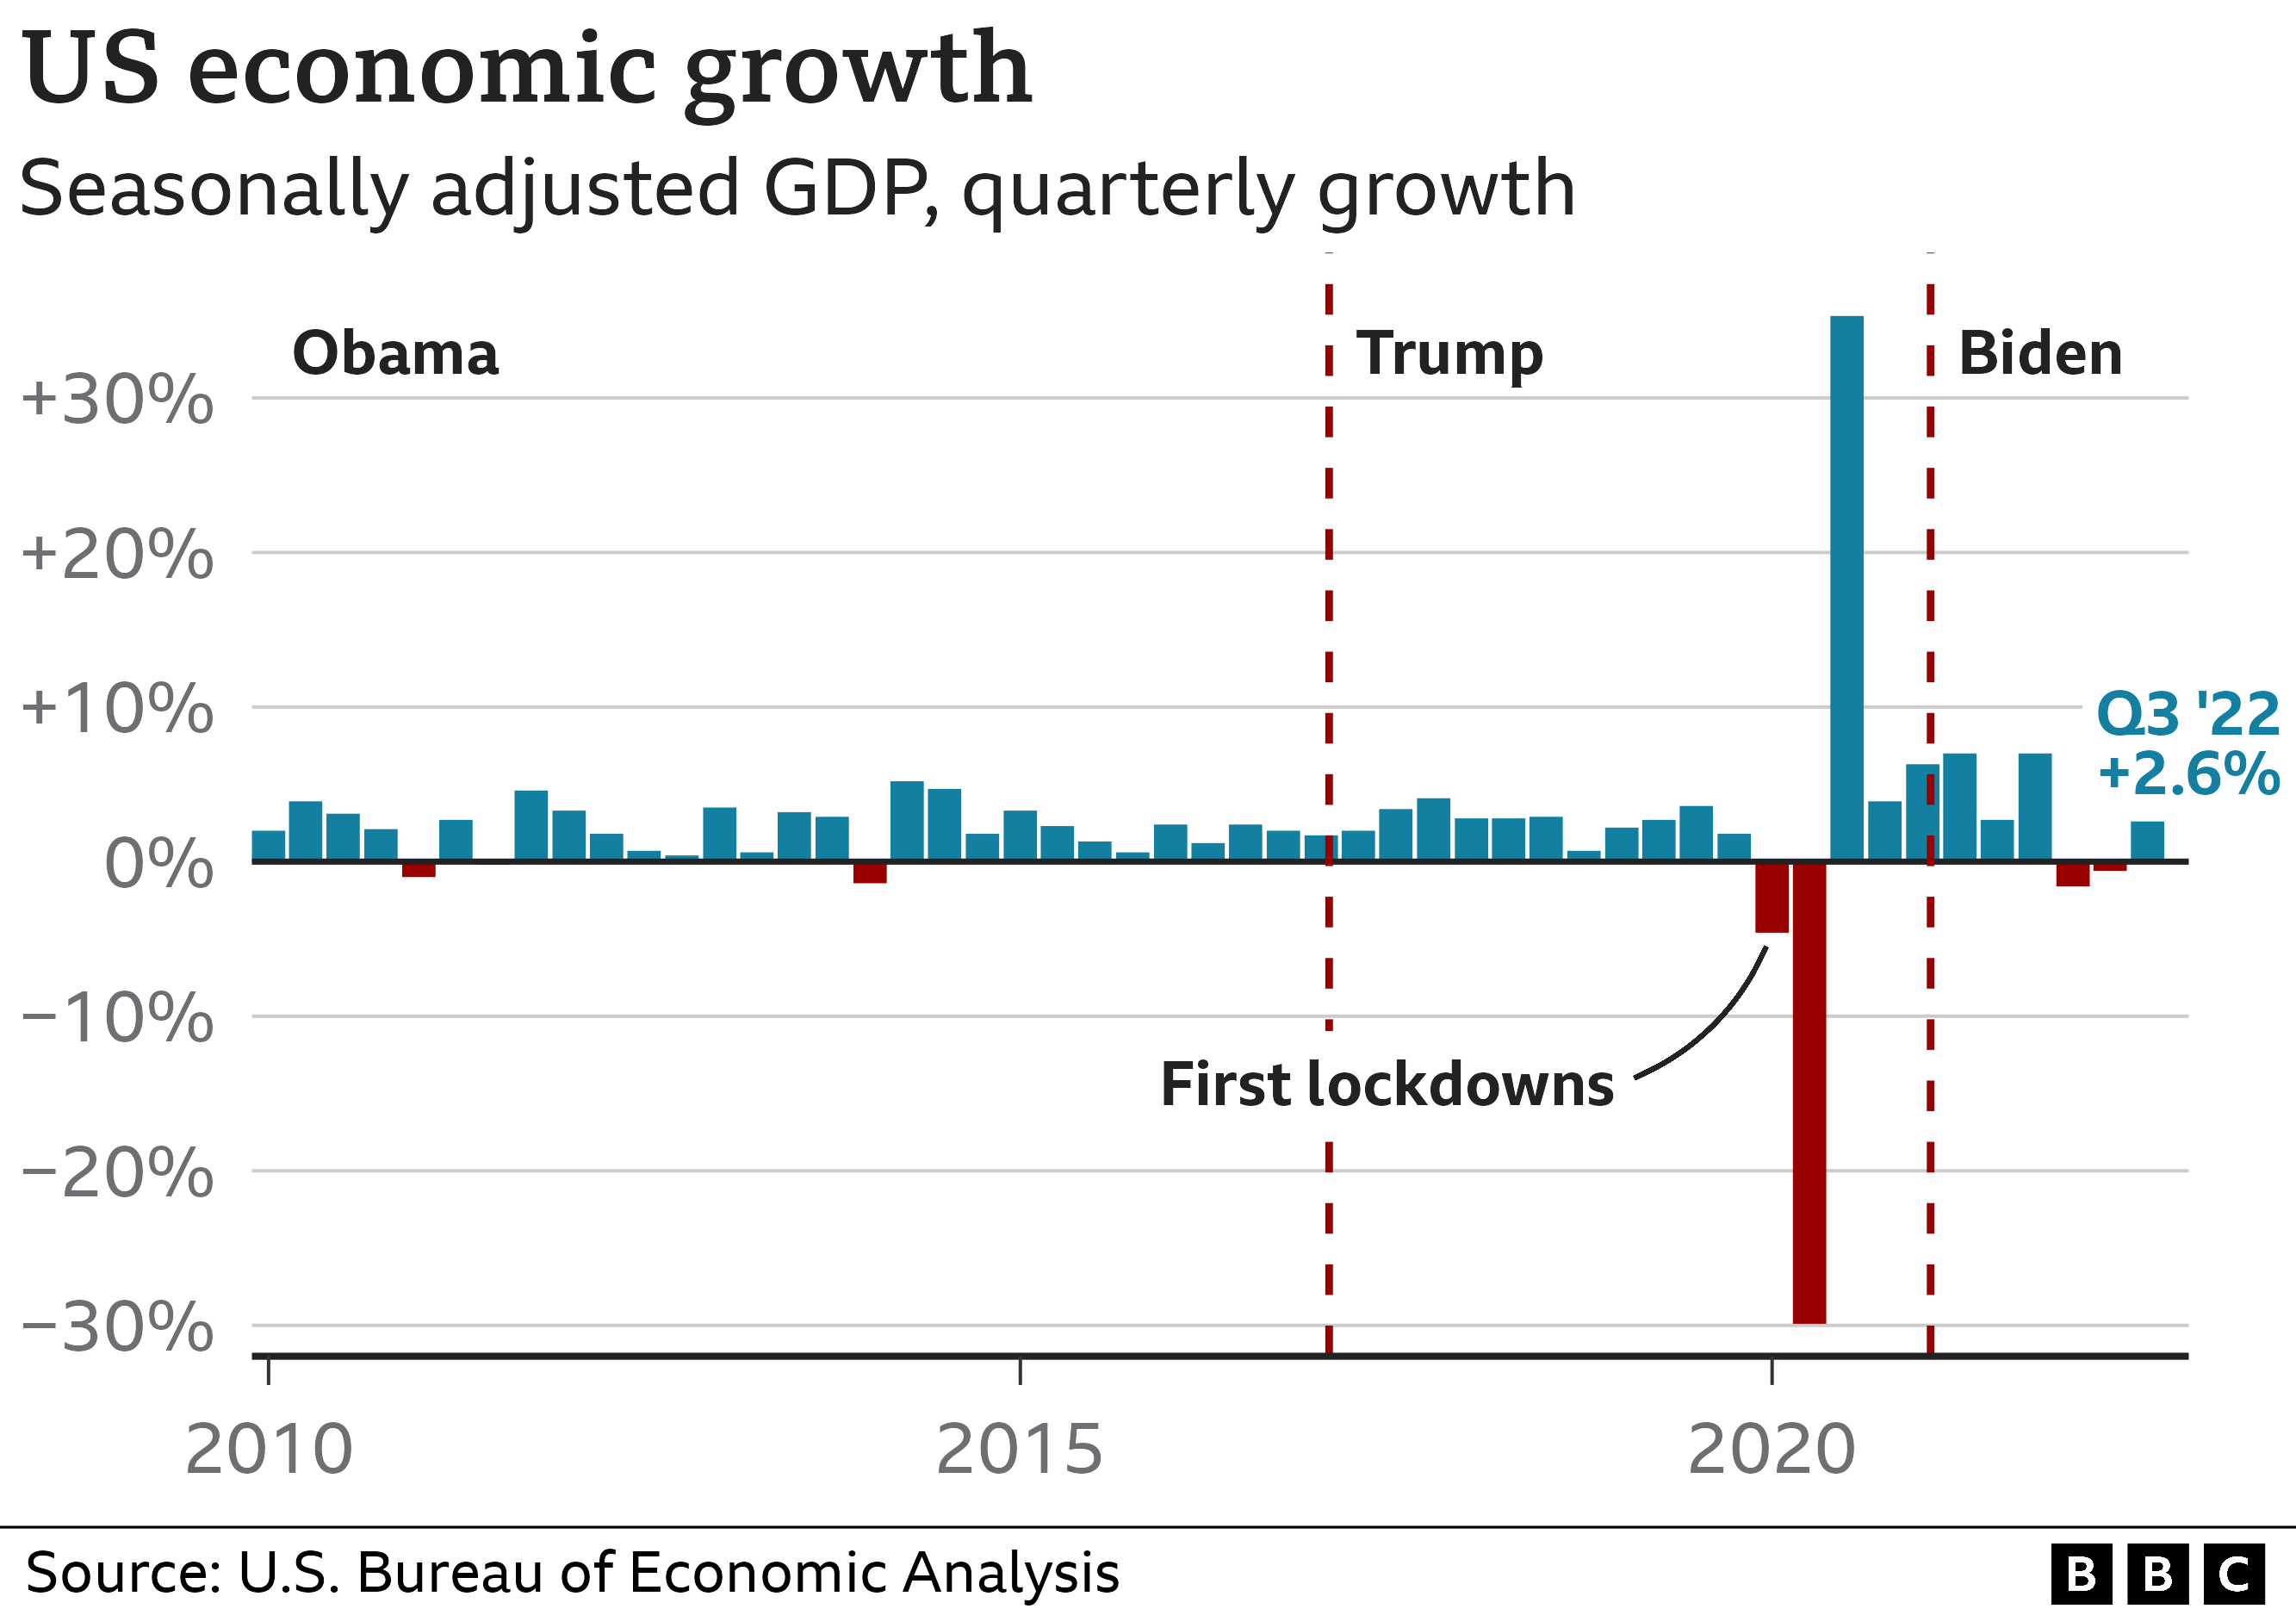 Bar chart showing quarterly GDP under Obama, Trump and Biden